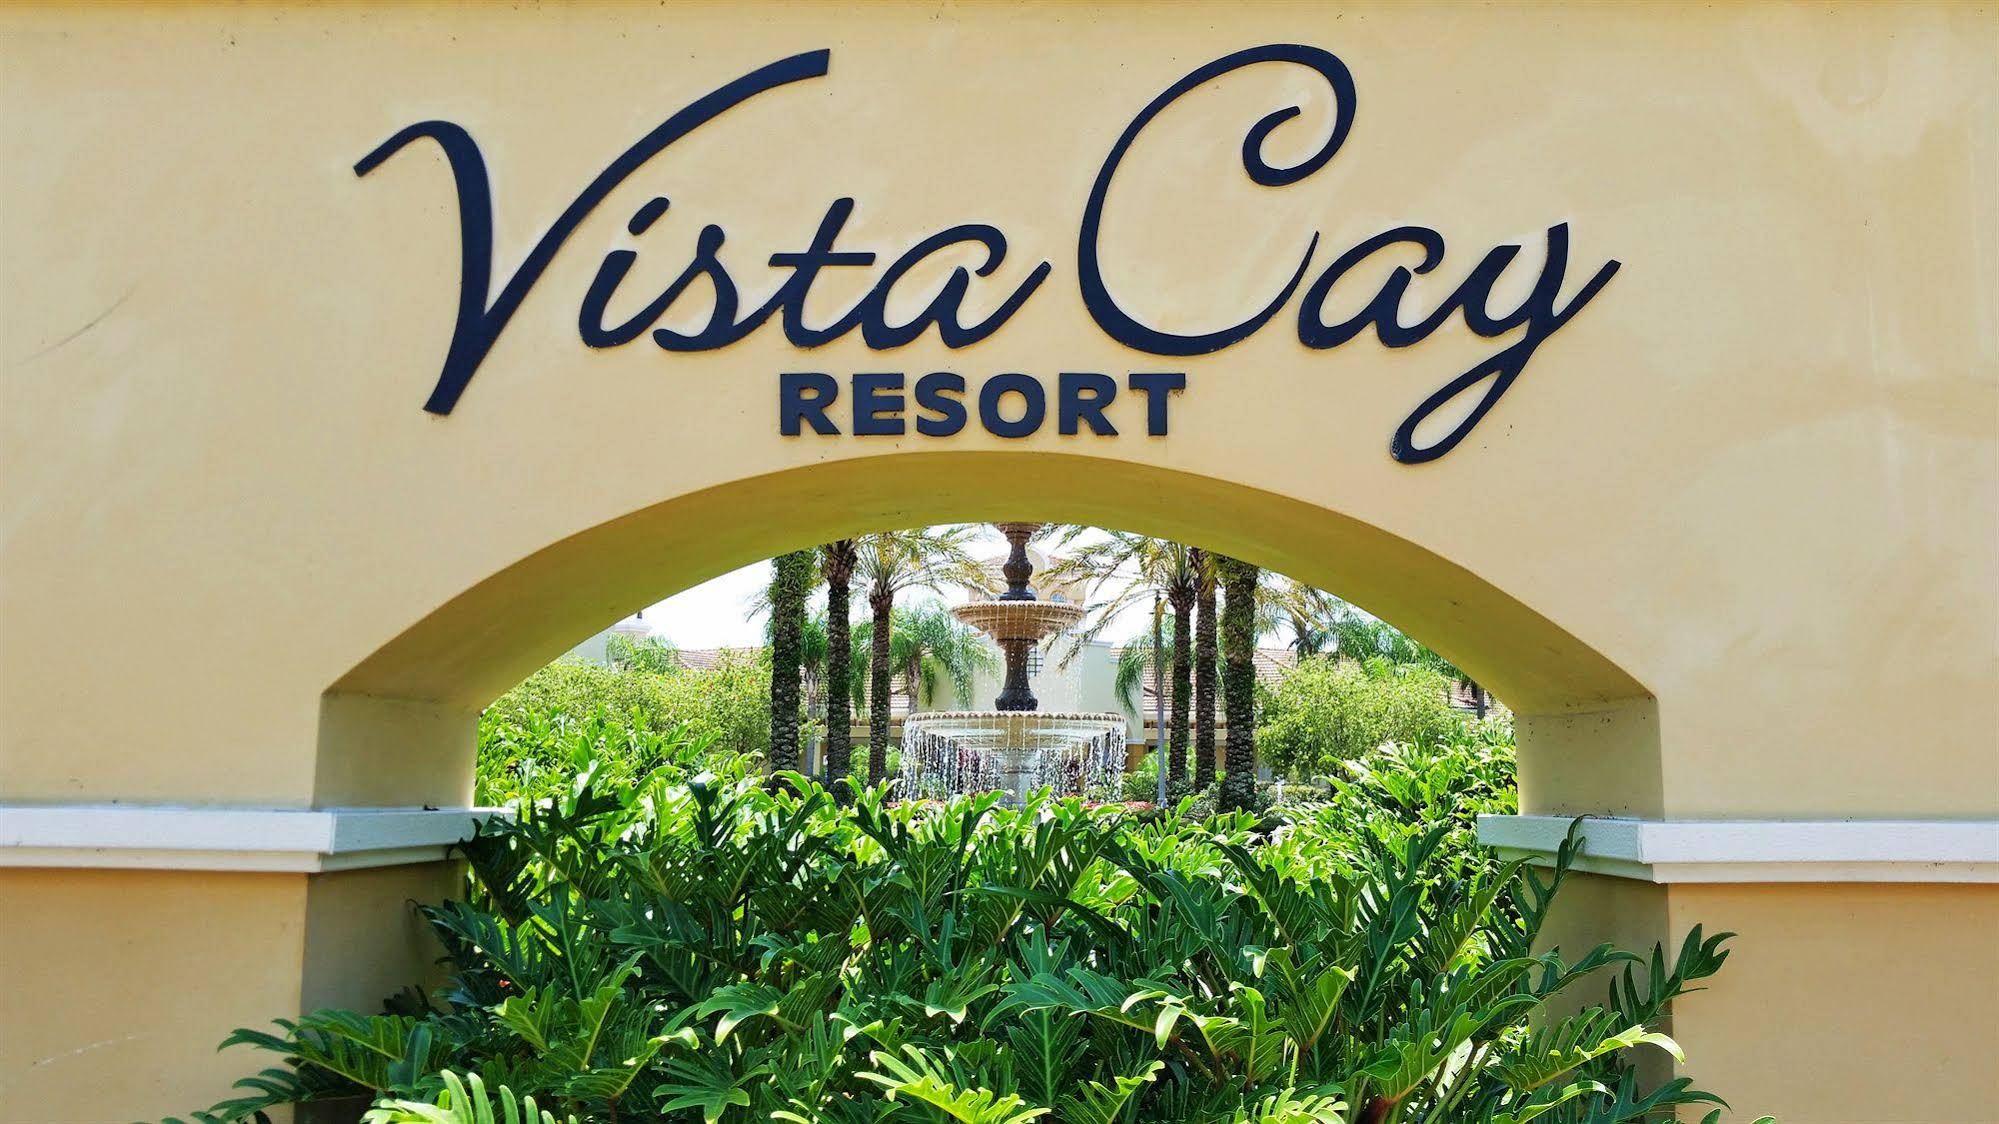 Vista Cay at Harbor Square by Casiola Vacation Homes